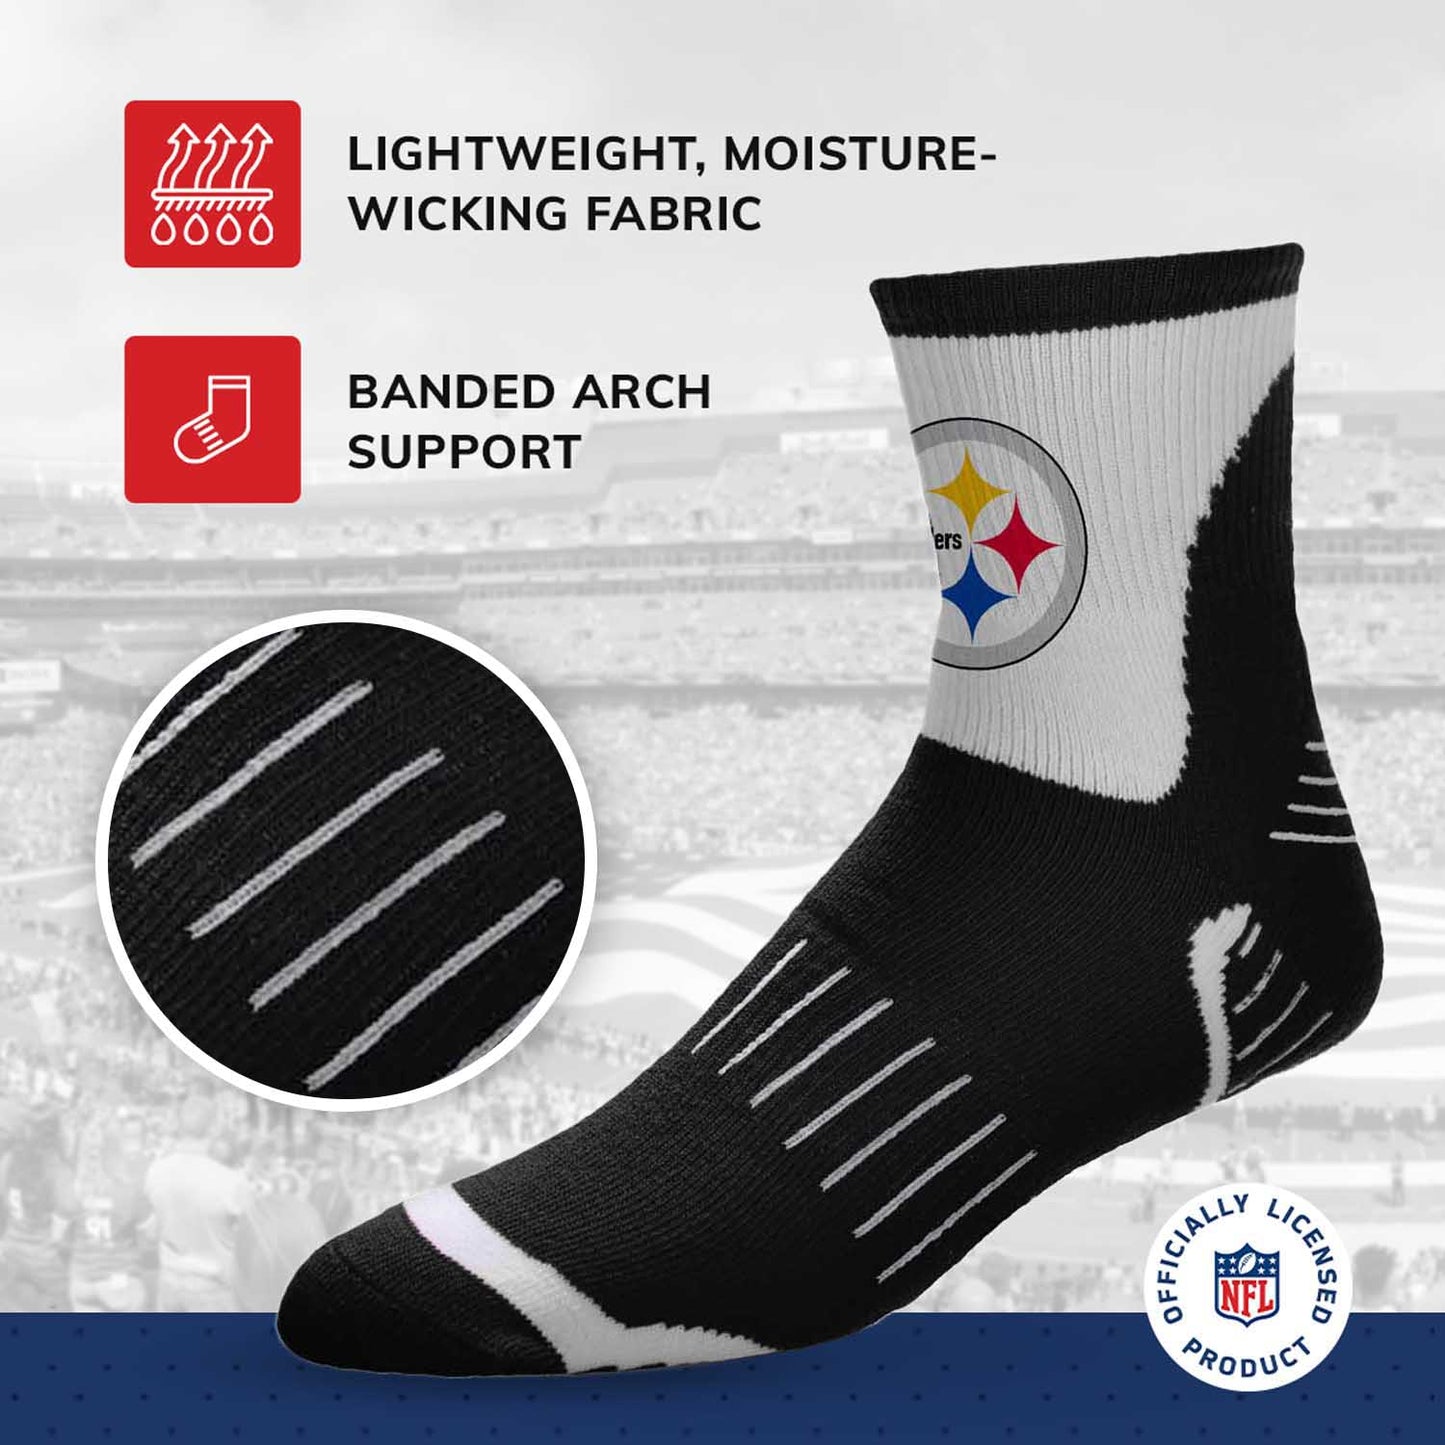 Pittsburgh Steelers NFL Performance Quarter Length Socks - Black